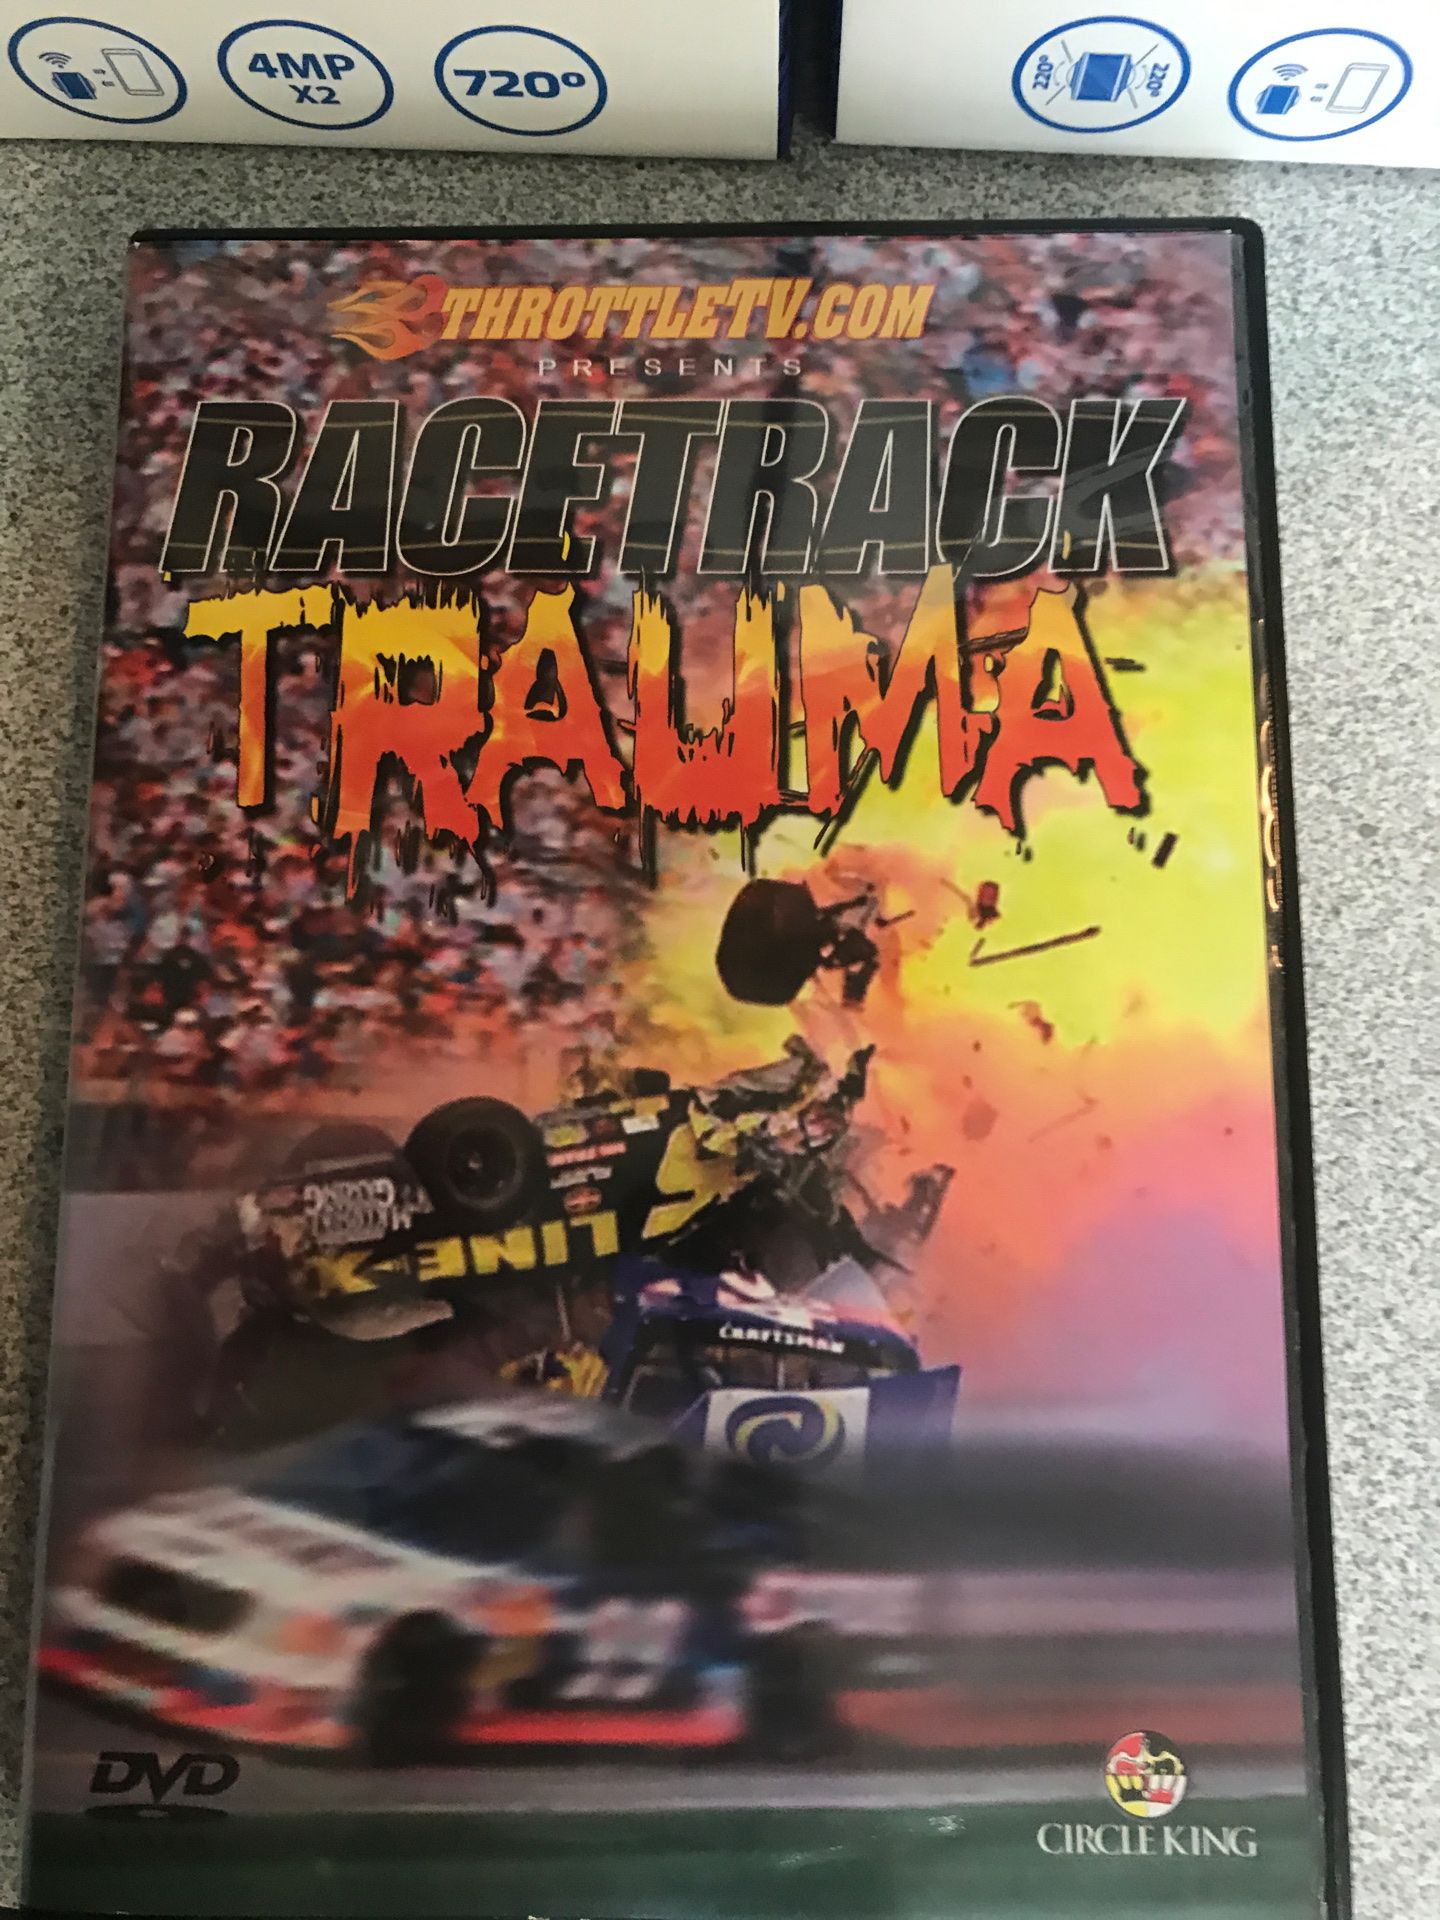 Racetrack Trauma dvd